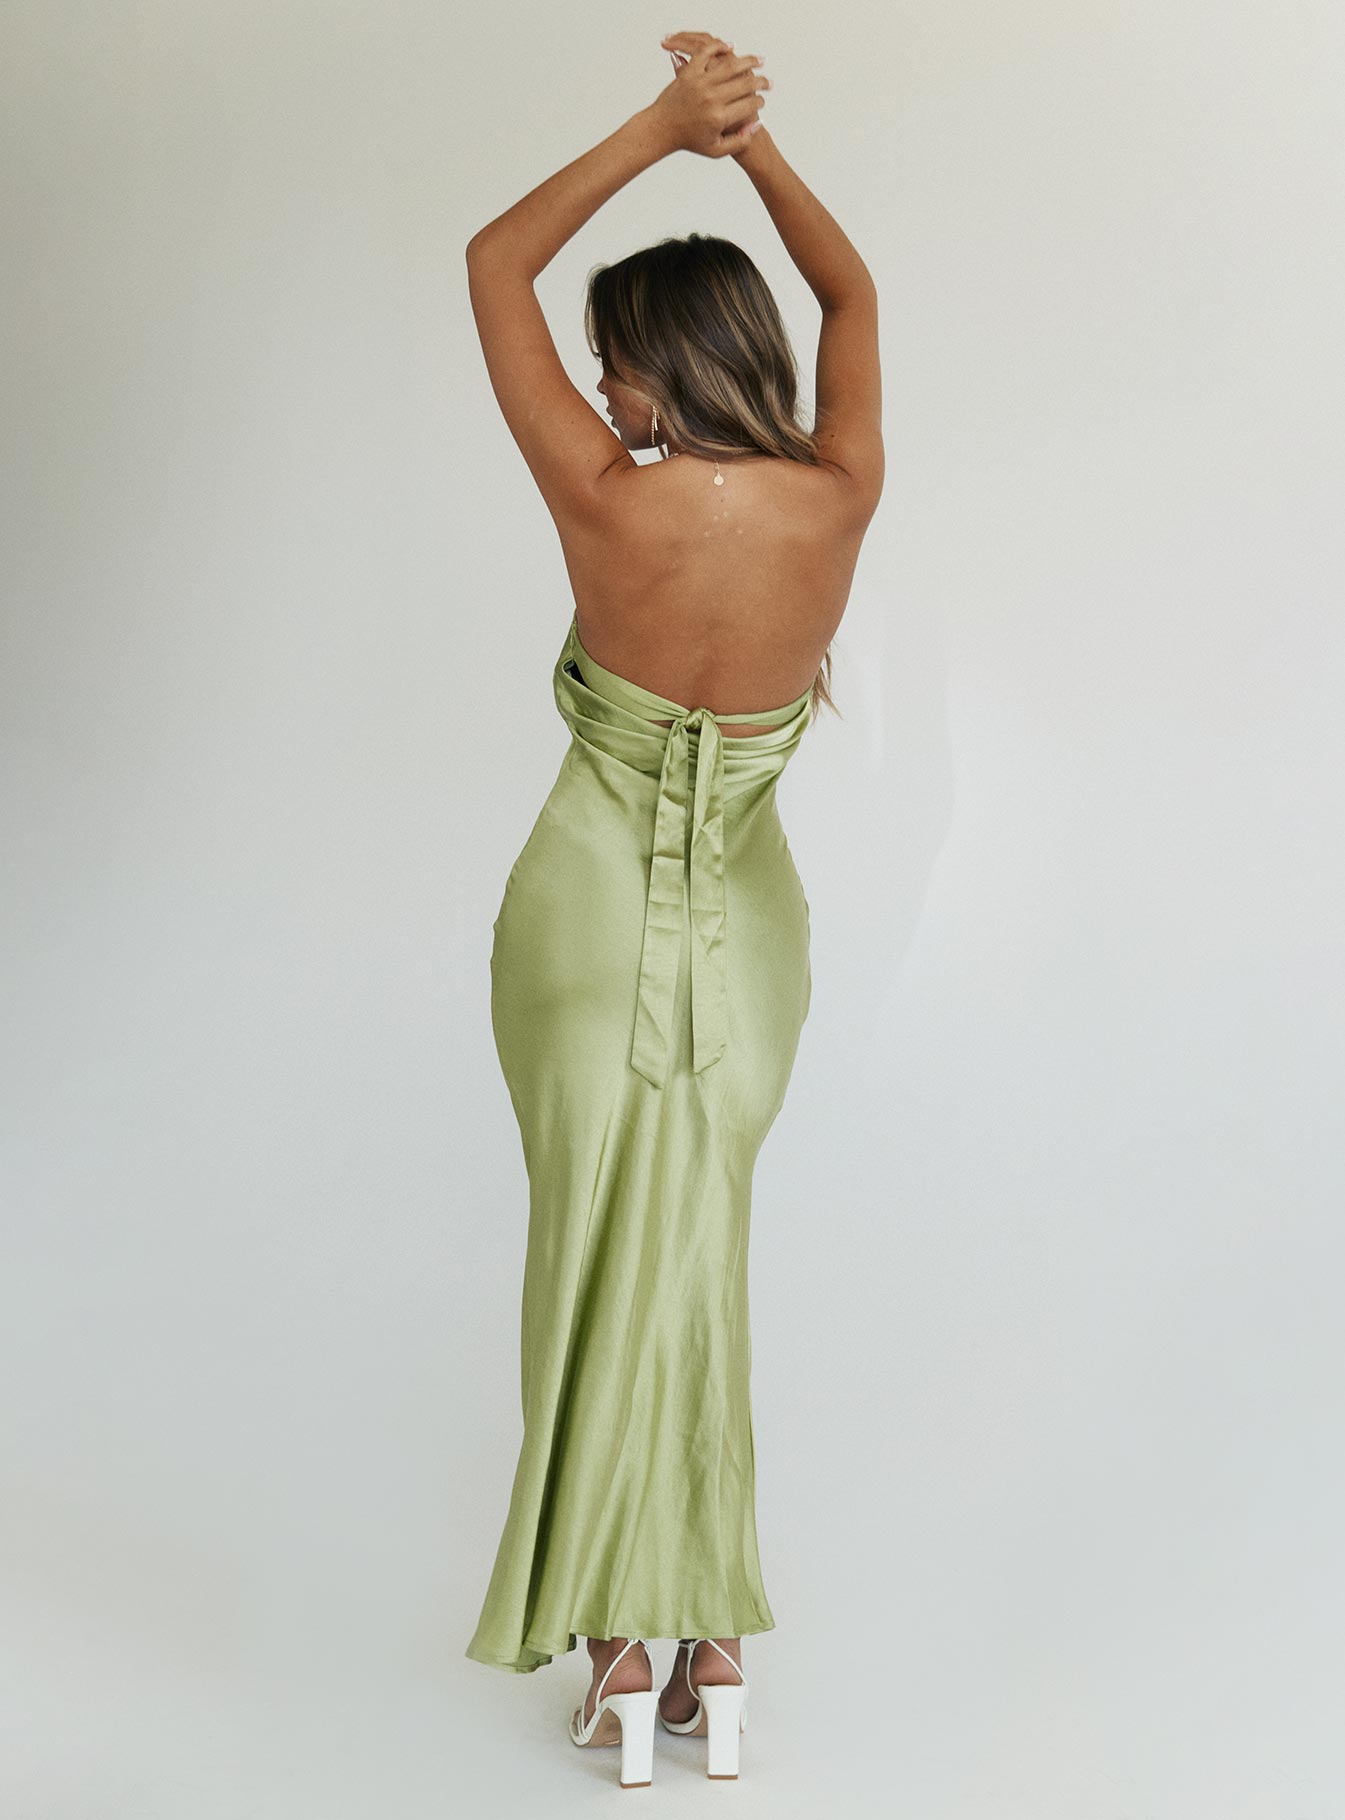 Shop Formal Dress - Haley Maxi Dress Green third image